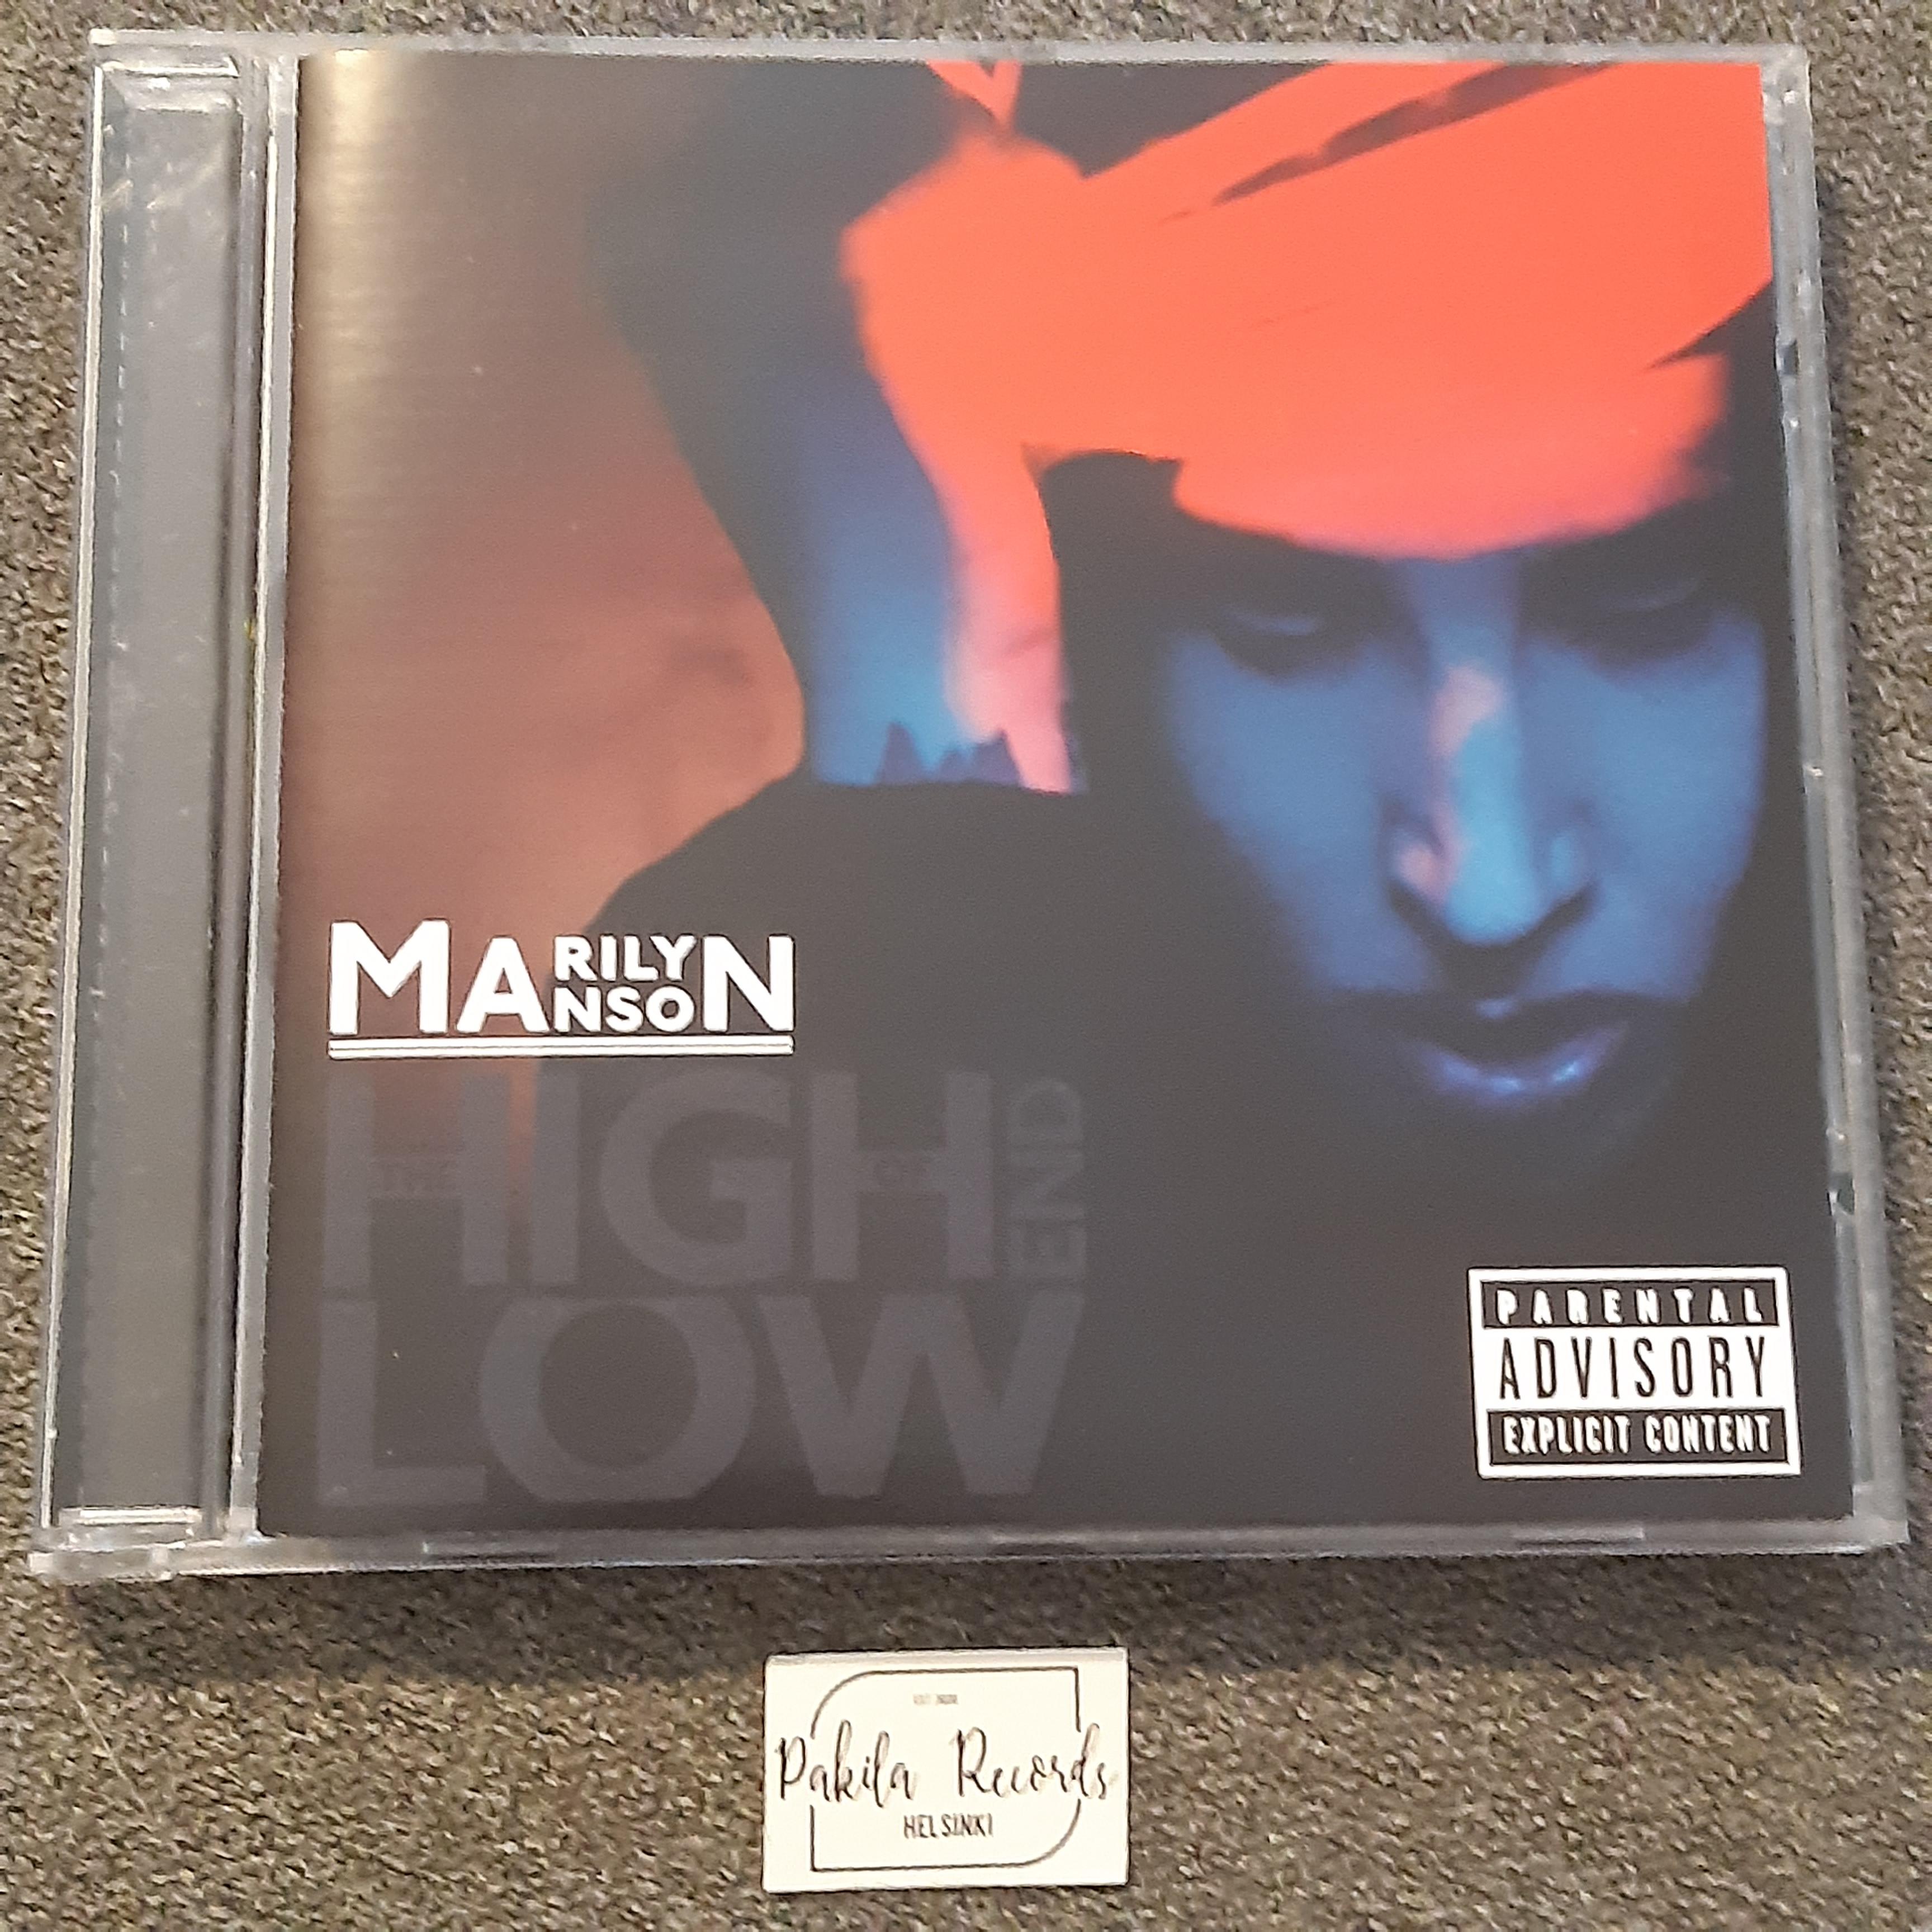 Marilyn Manson - High End Of Low - CD (käytetty)